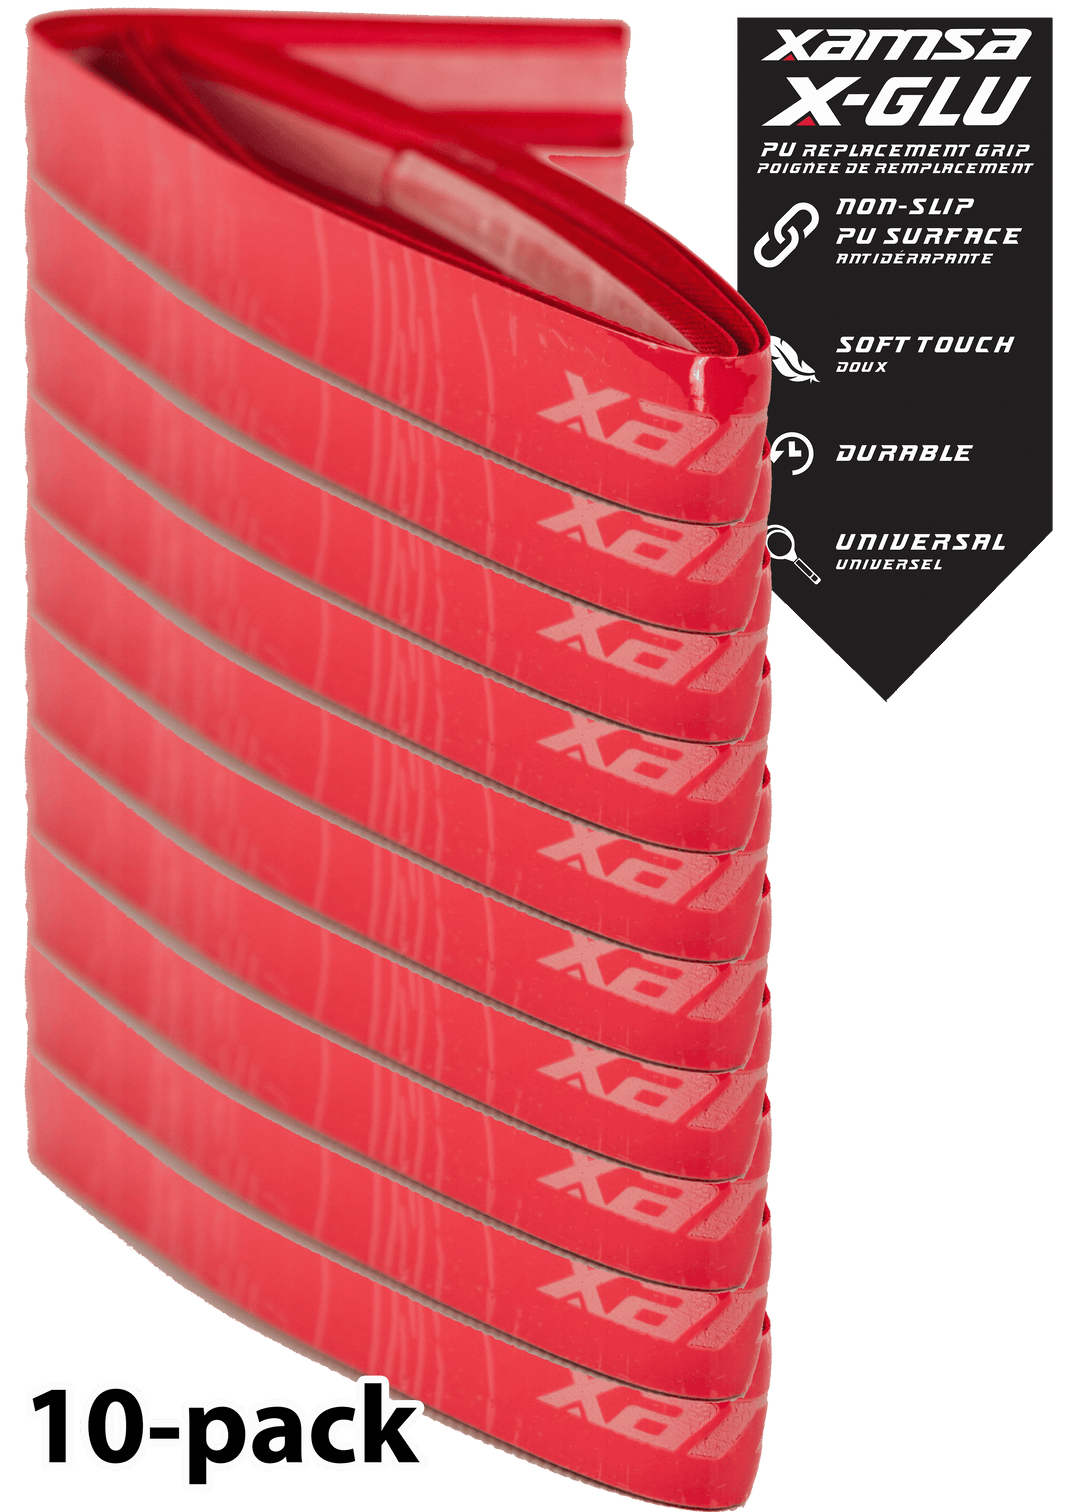 Xamsa X-GLU Replacement Grip Grips Xamsa Red 10-pack 